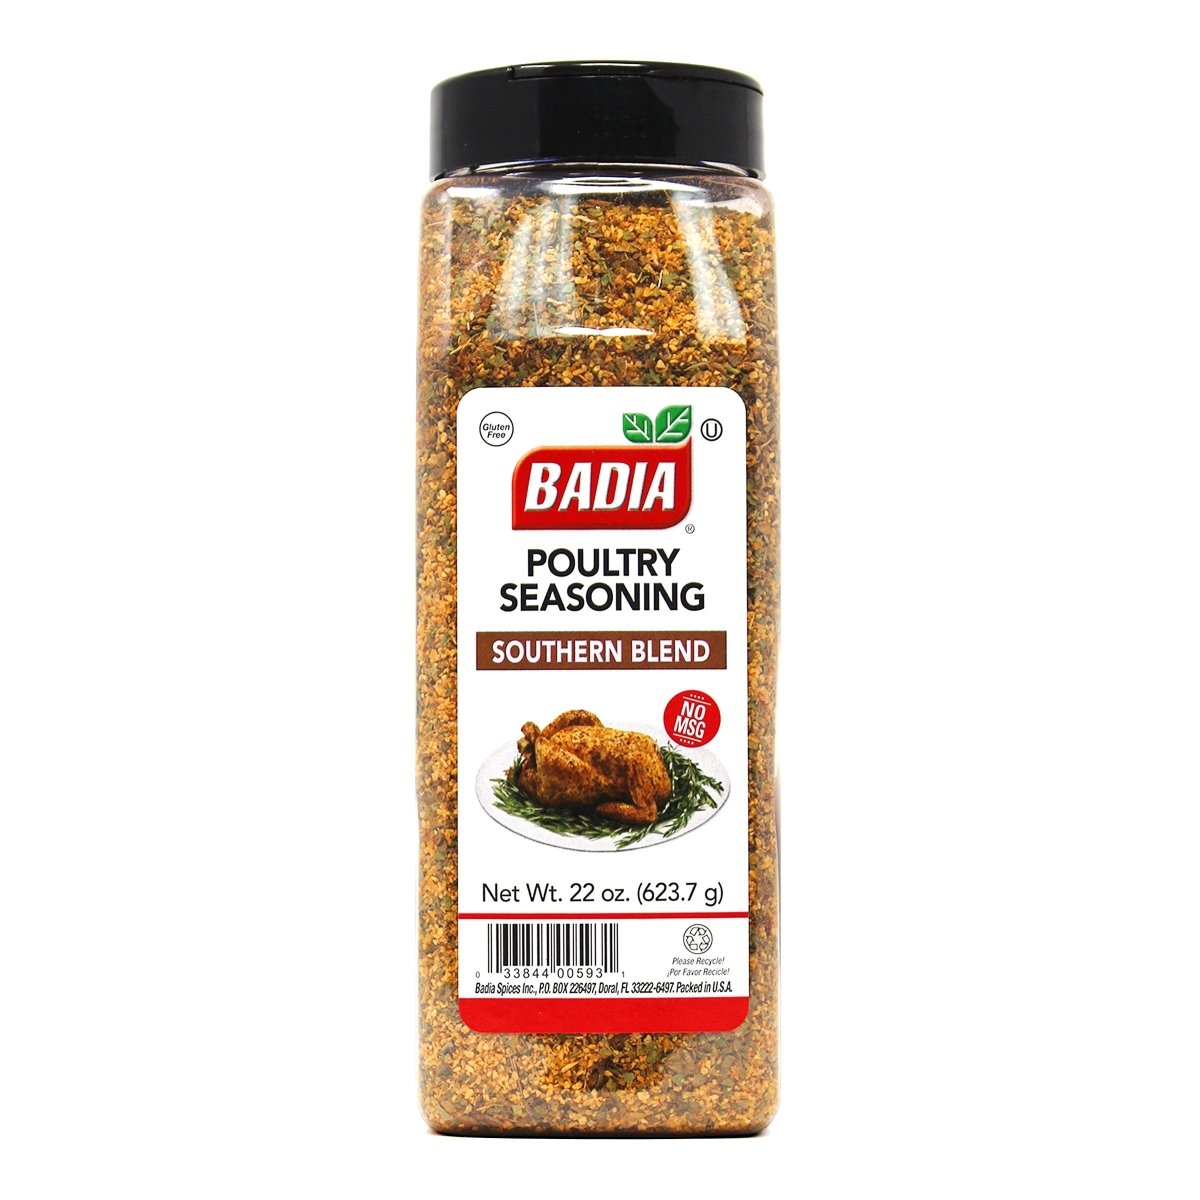 Badia Poultry Seasoning 22oz 00593 - Texas Star Grill Shop 593